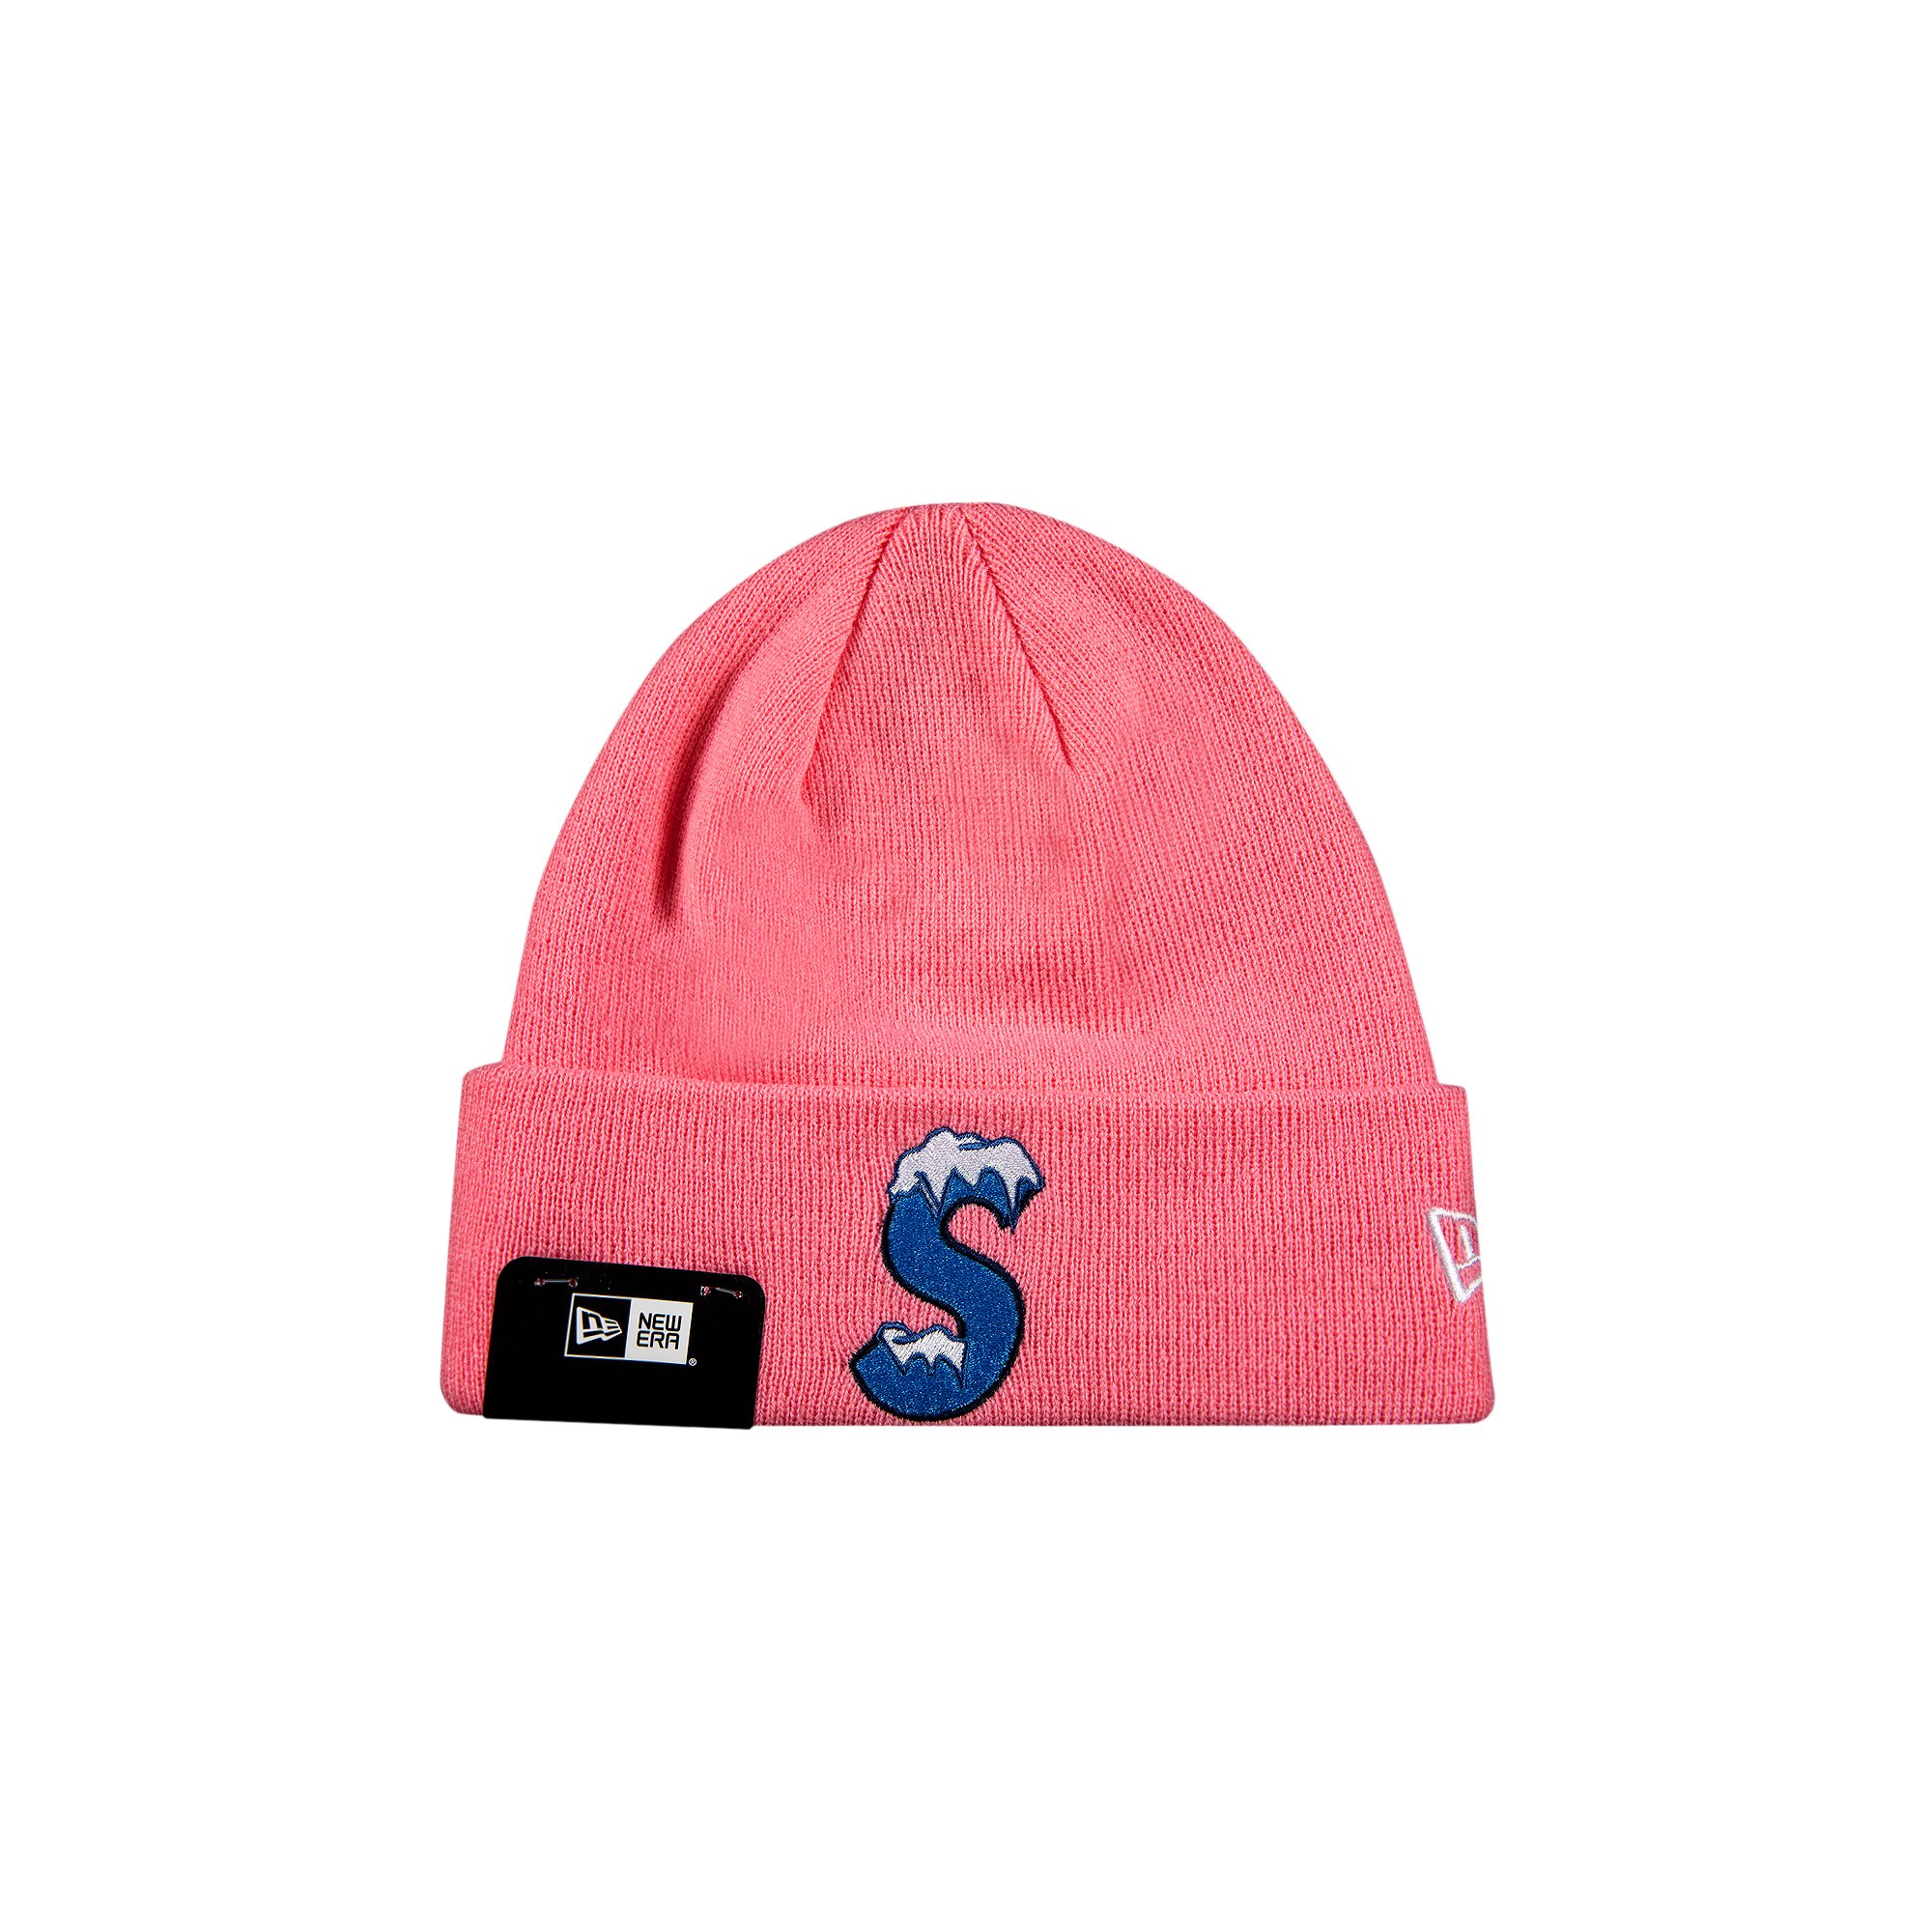 Buy Supreme x New Era S Logo Beanie 'Pink' - FW20BN15 PINK